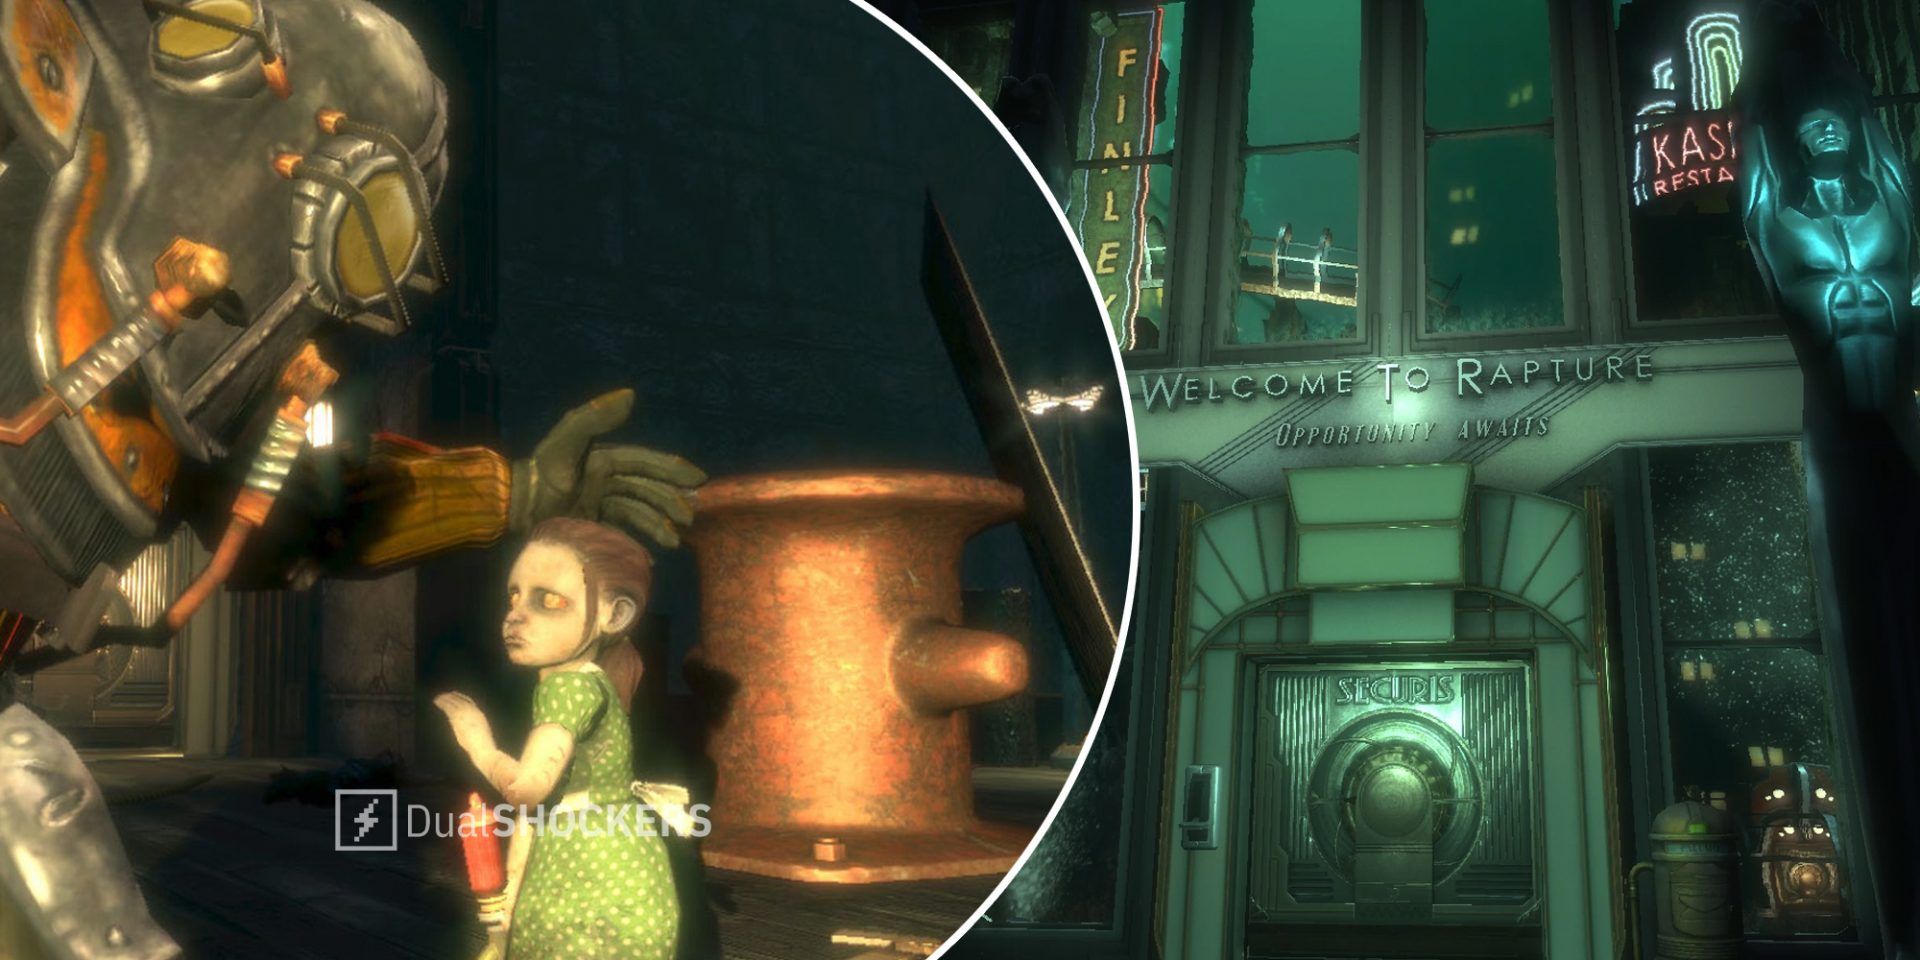 BioShock Little Sister on left, Rapture on right